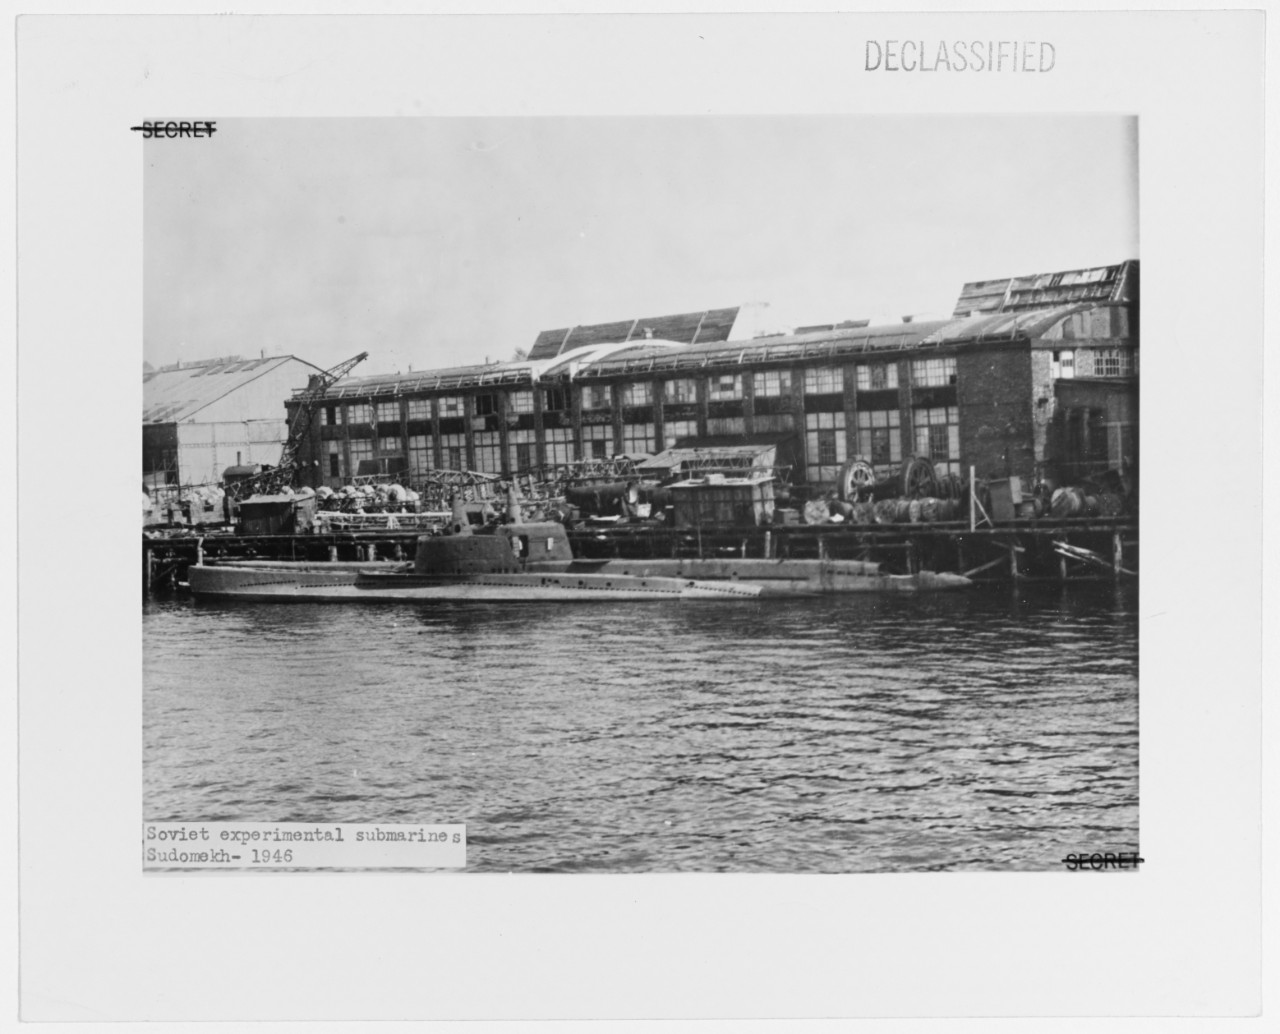 Experimental Soviet submarines M-401 (foreground) and M-92 (background) at Sudomekh shipyard #196, Leningrad circa 1931-1937. Photo was published in the book “Submarines with single engine” by Badanin V.A. (publishing house “Gangut”, Saint-Petersburg, 1998).